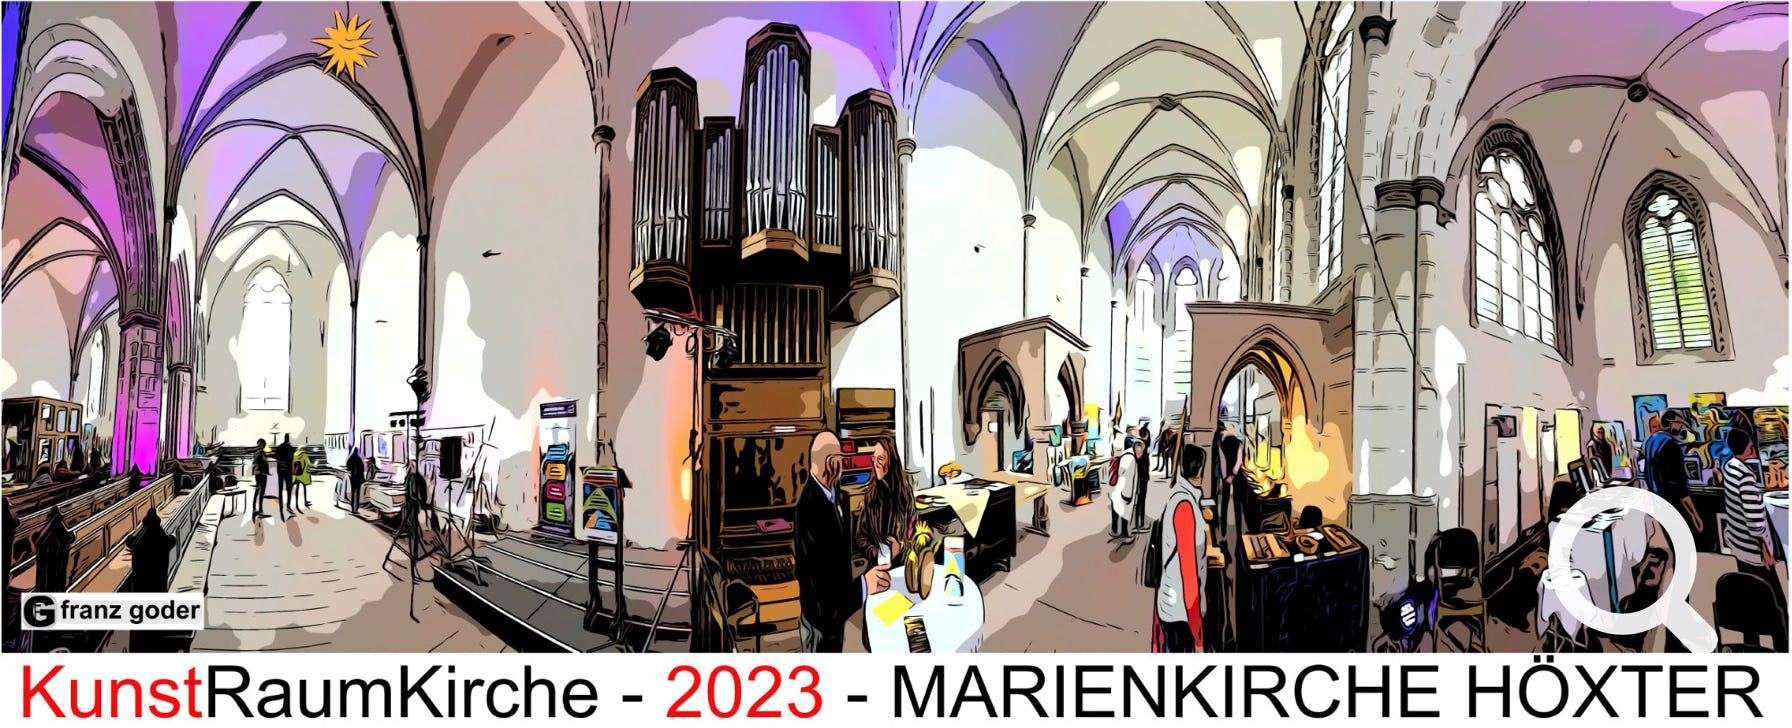 3. Kunstmarkt Höxter 2023 - KunstRaumKirche - Marienkirche Höxter